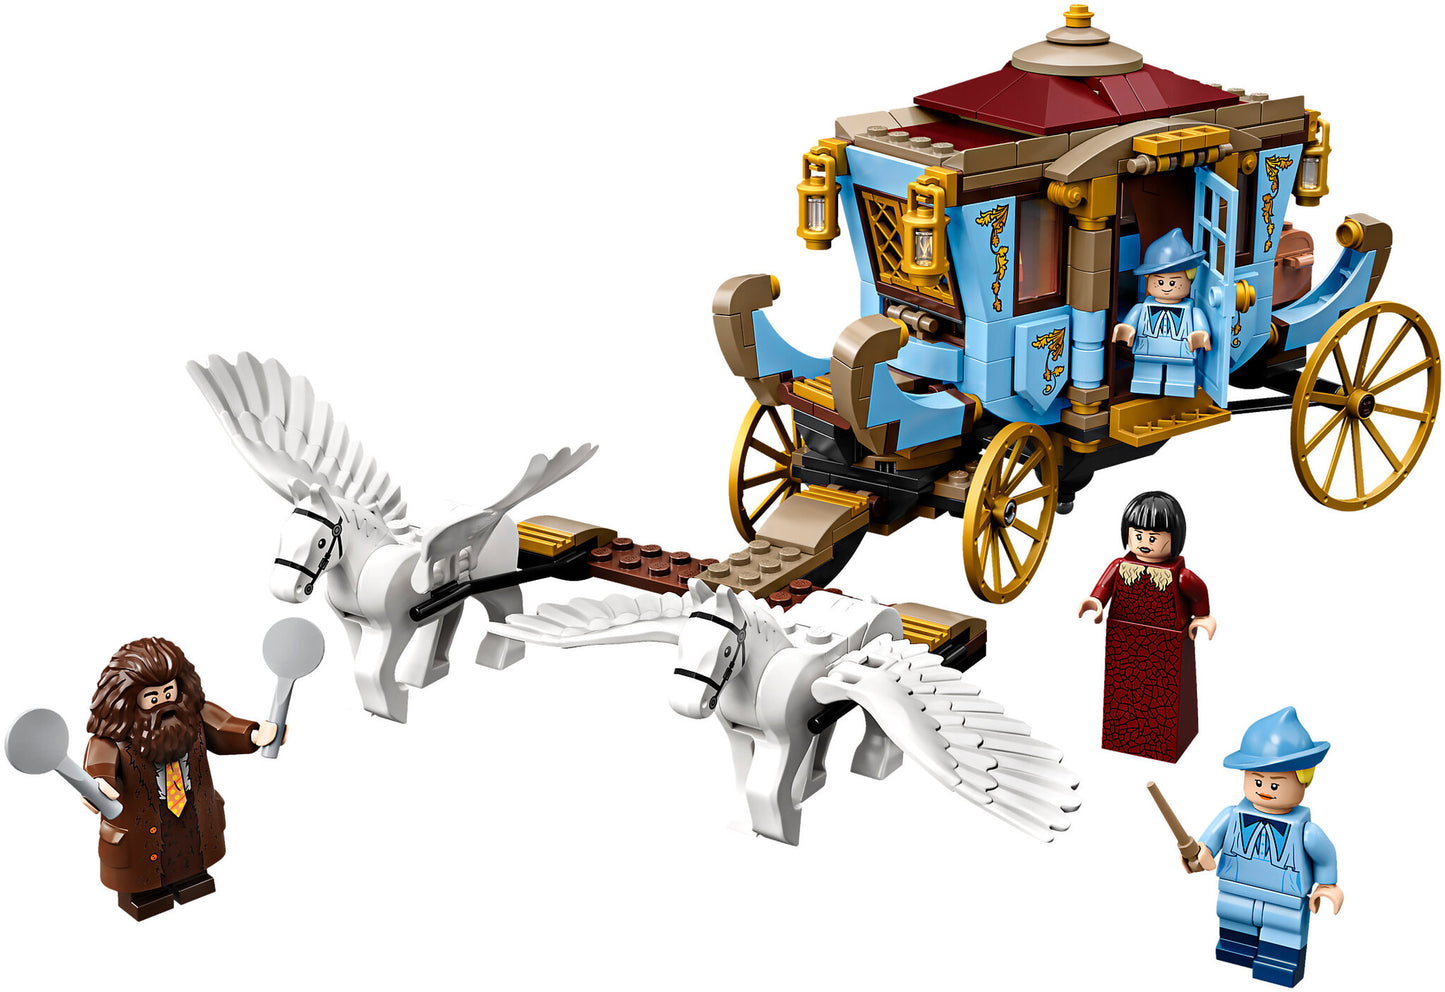 75958 LEGO Harry Potter - La Carrozza Di Beauxbatons: Arrivo A Hogwarts